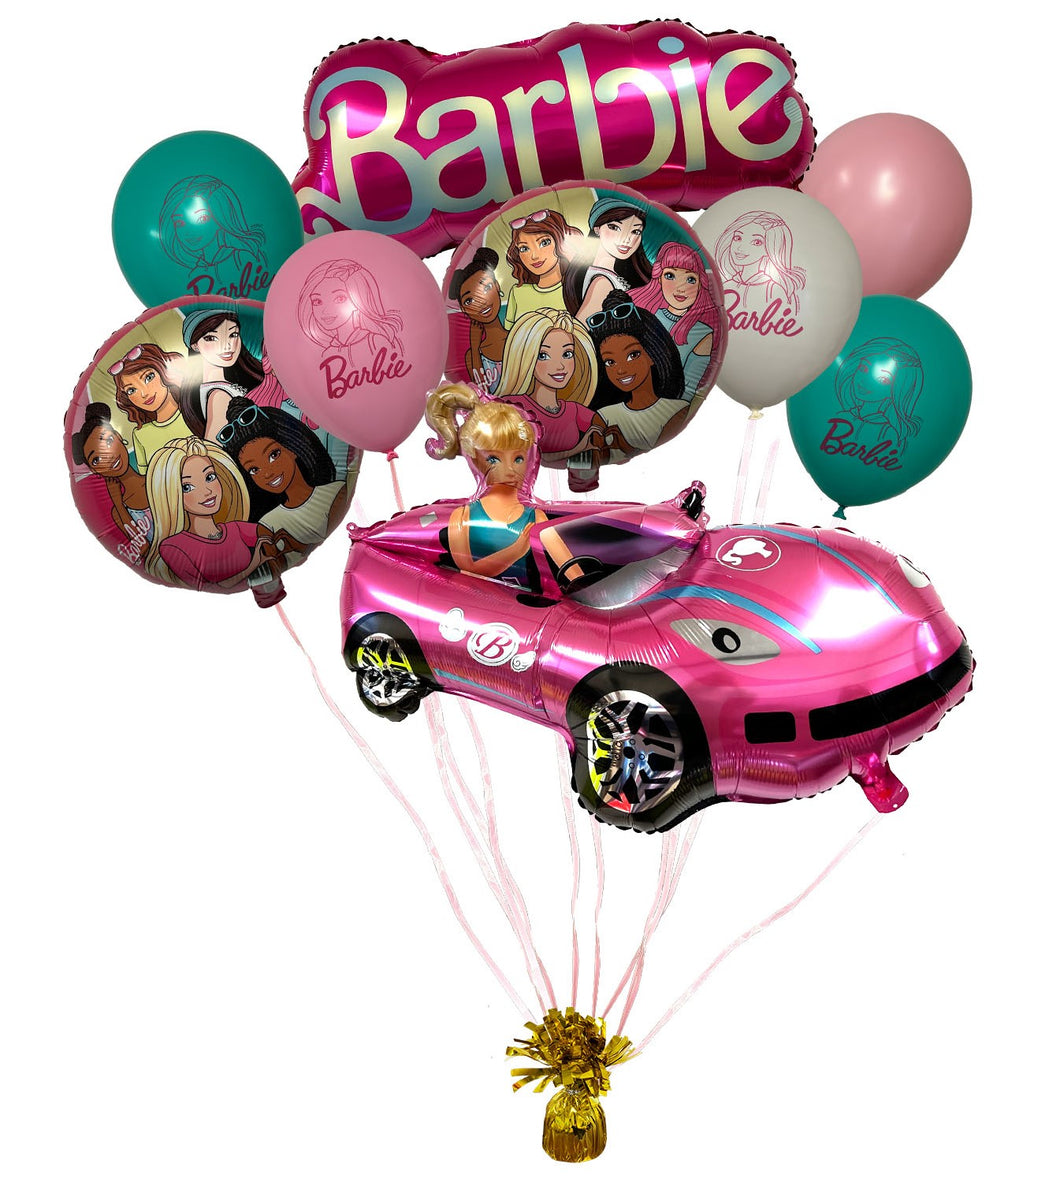 Barbie Balloon Kit